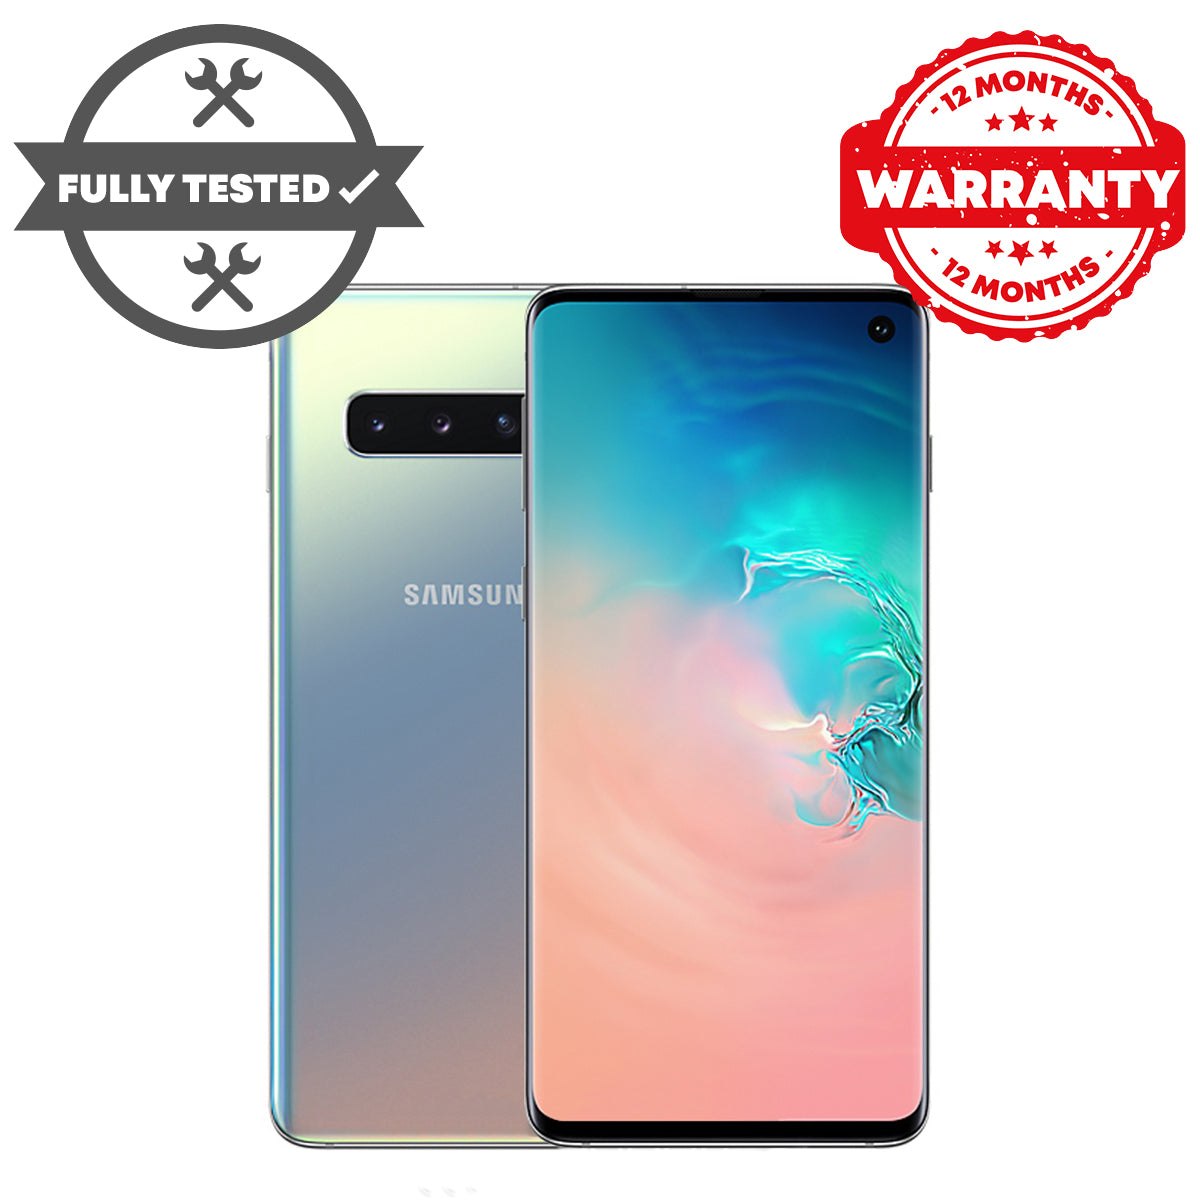 Samsung Galaxy S10 Prism White – Fone Dealz Ltd